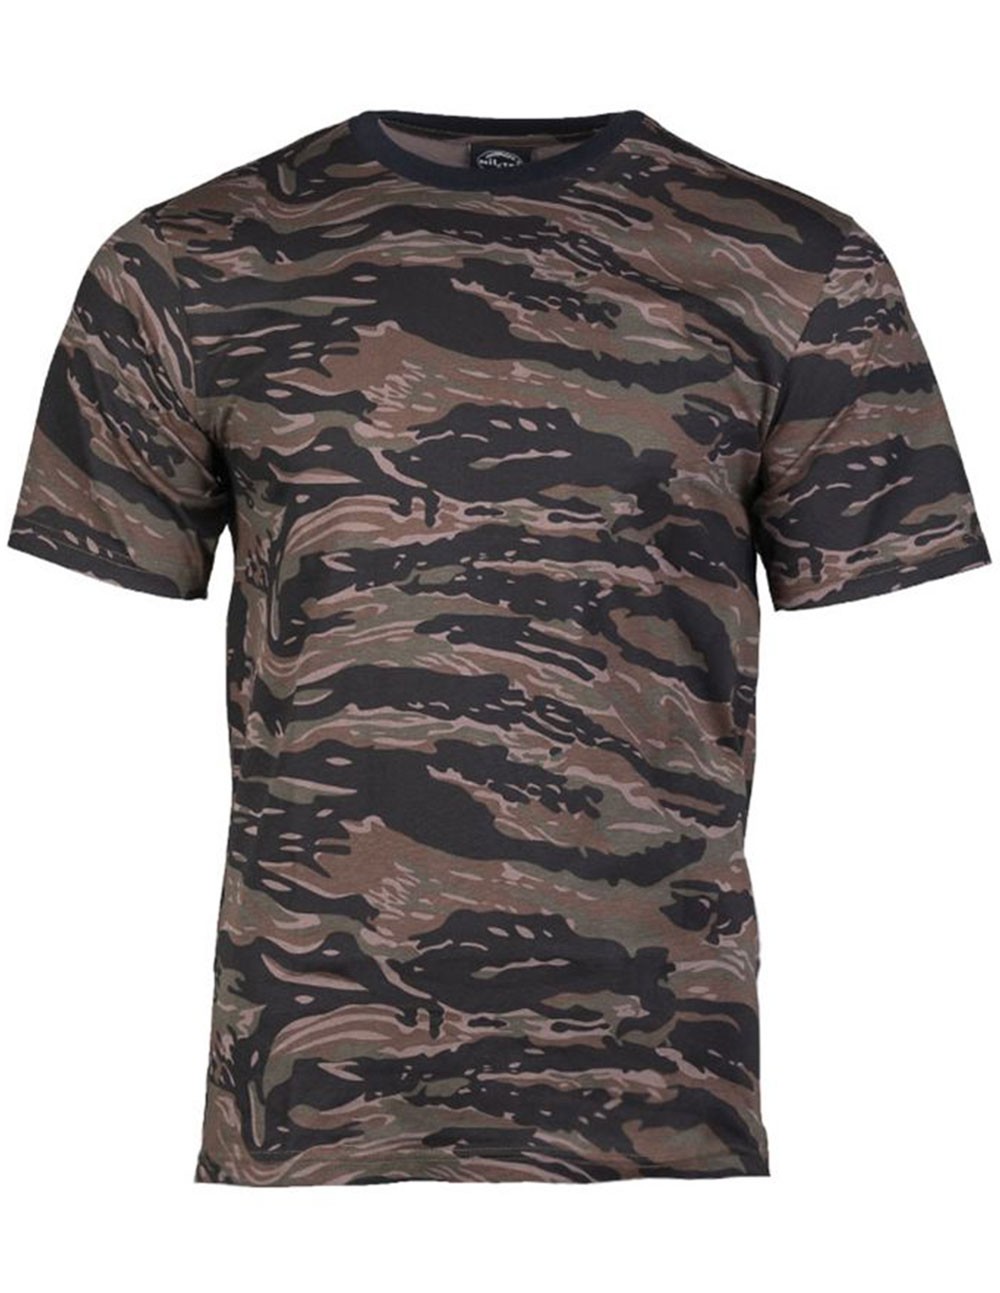 Miltec Camouflage T Shirt Cotton Tiger Stripe